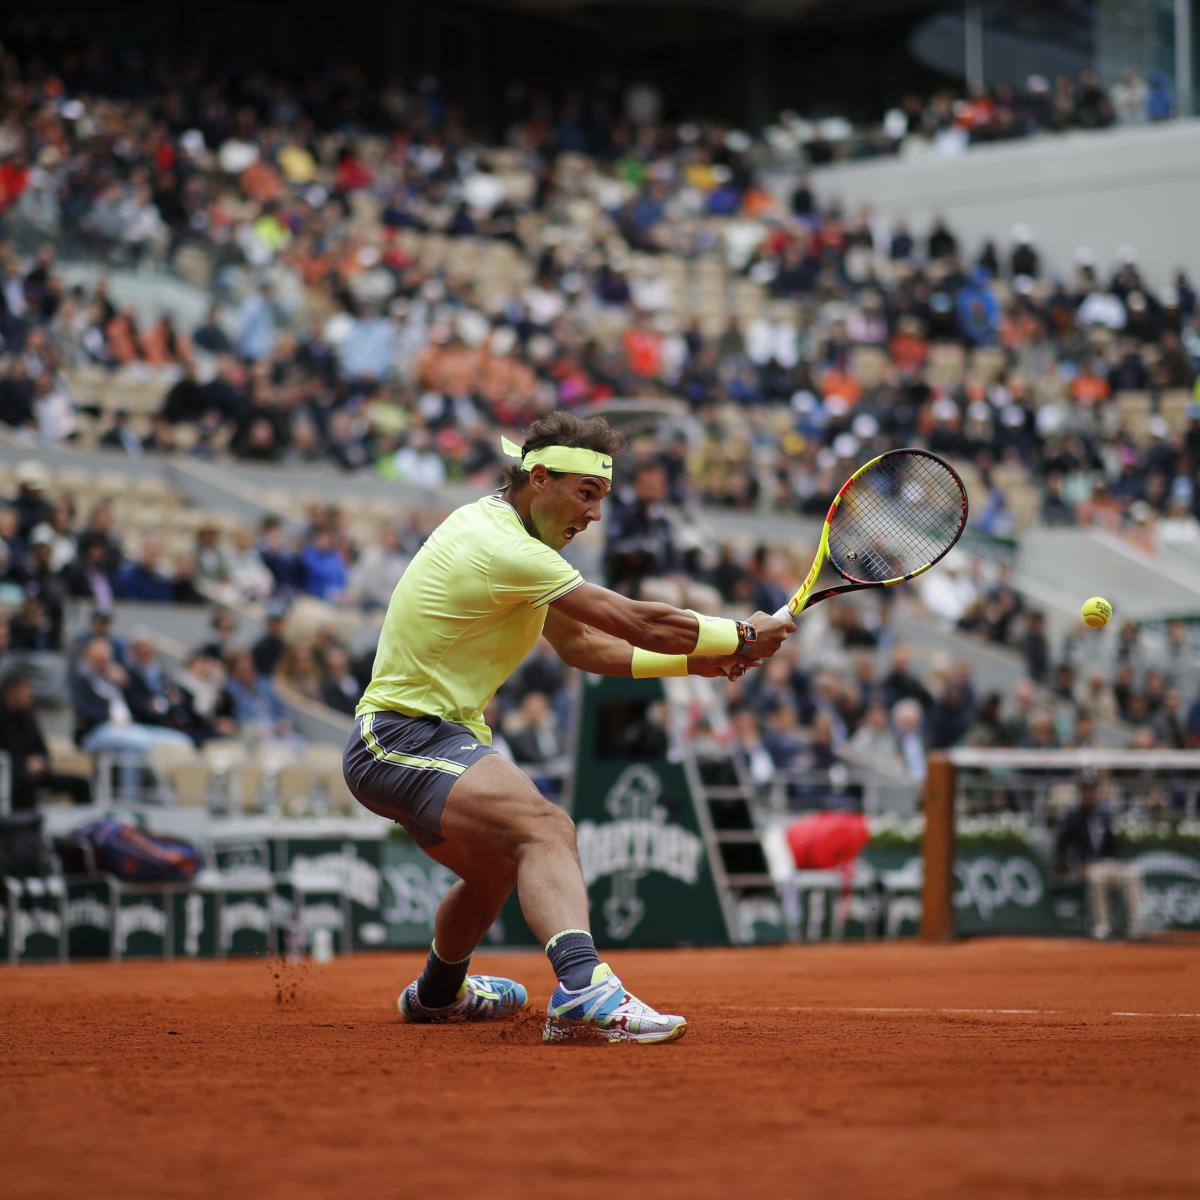 French Open 2019 Men's Final: Live Stream for Rafael Nadal vs. Dominic Thiem ...